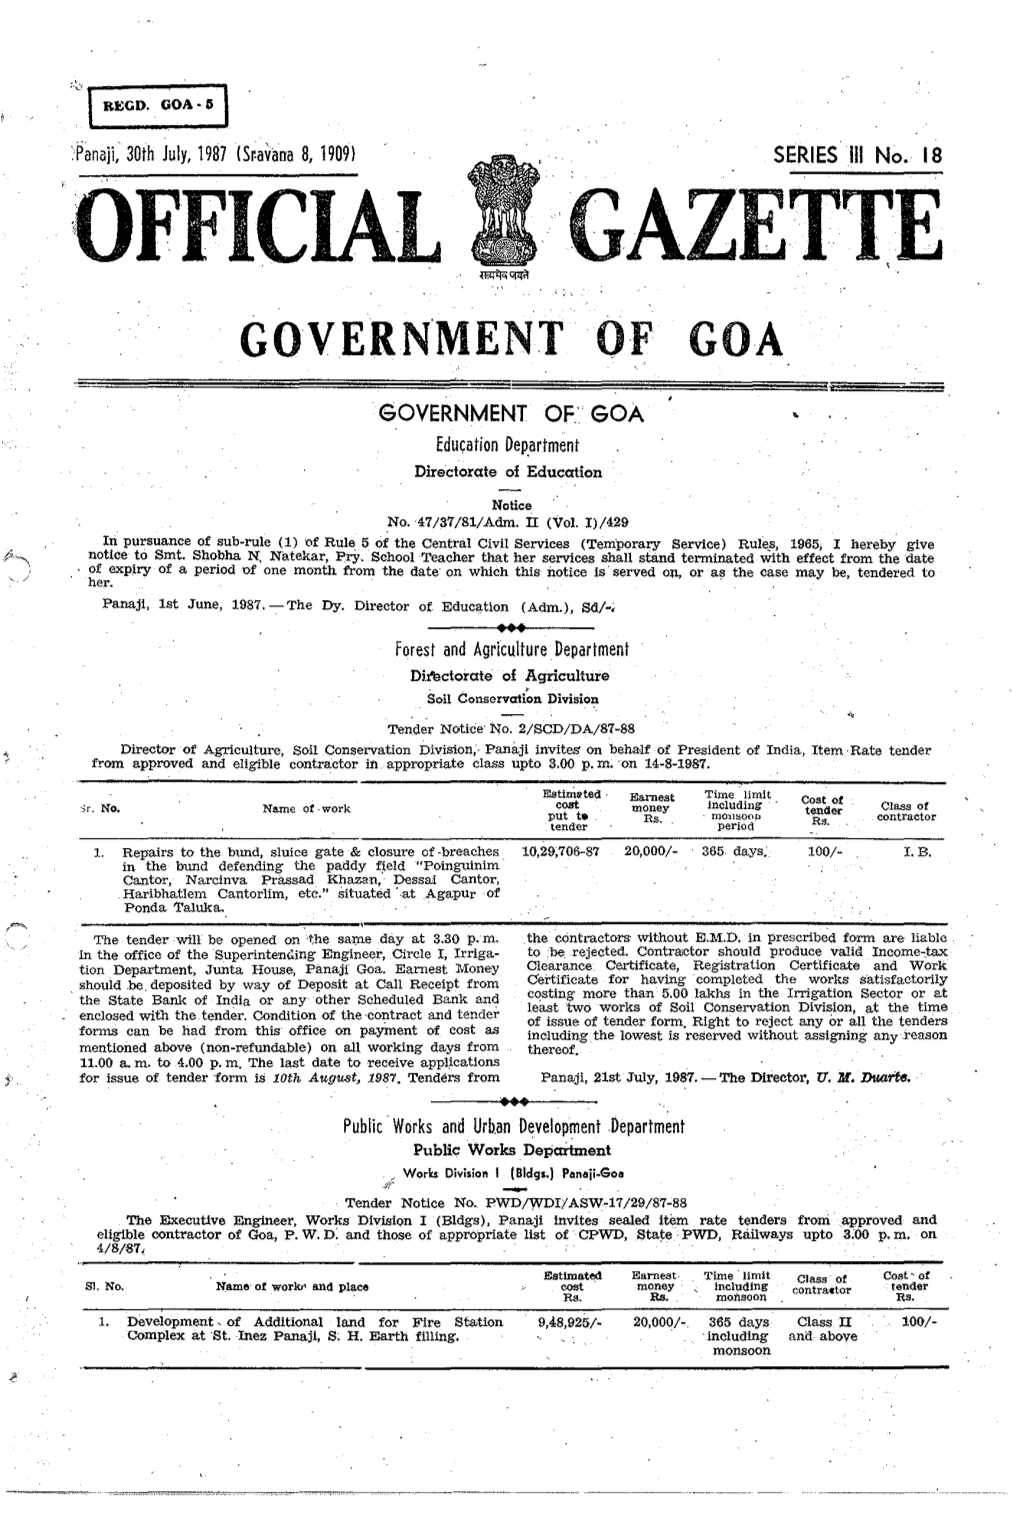 Official Gazette, Govern'ment of Goa